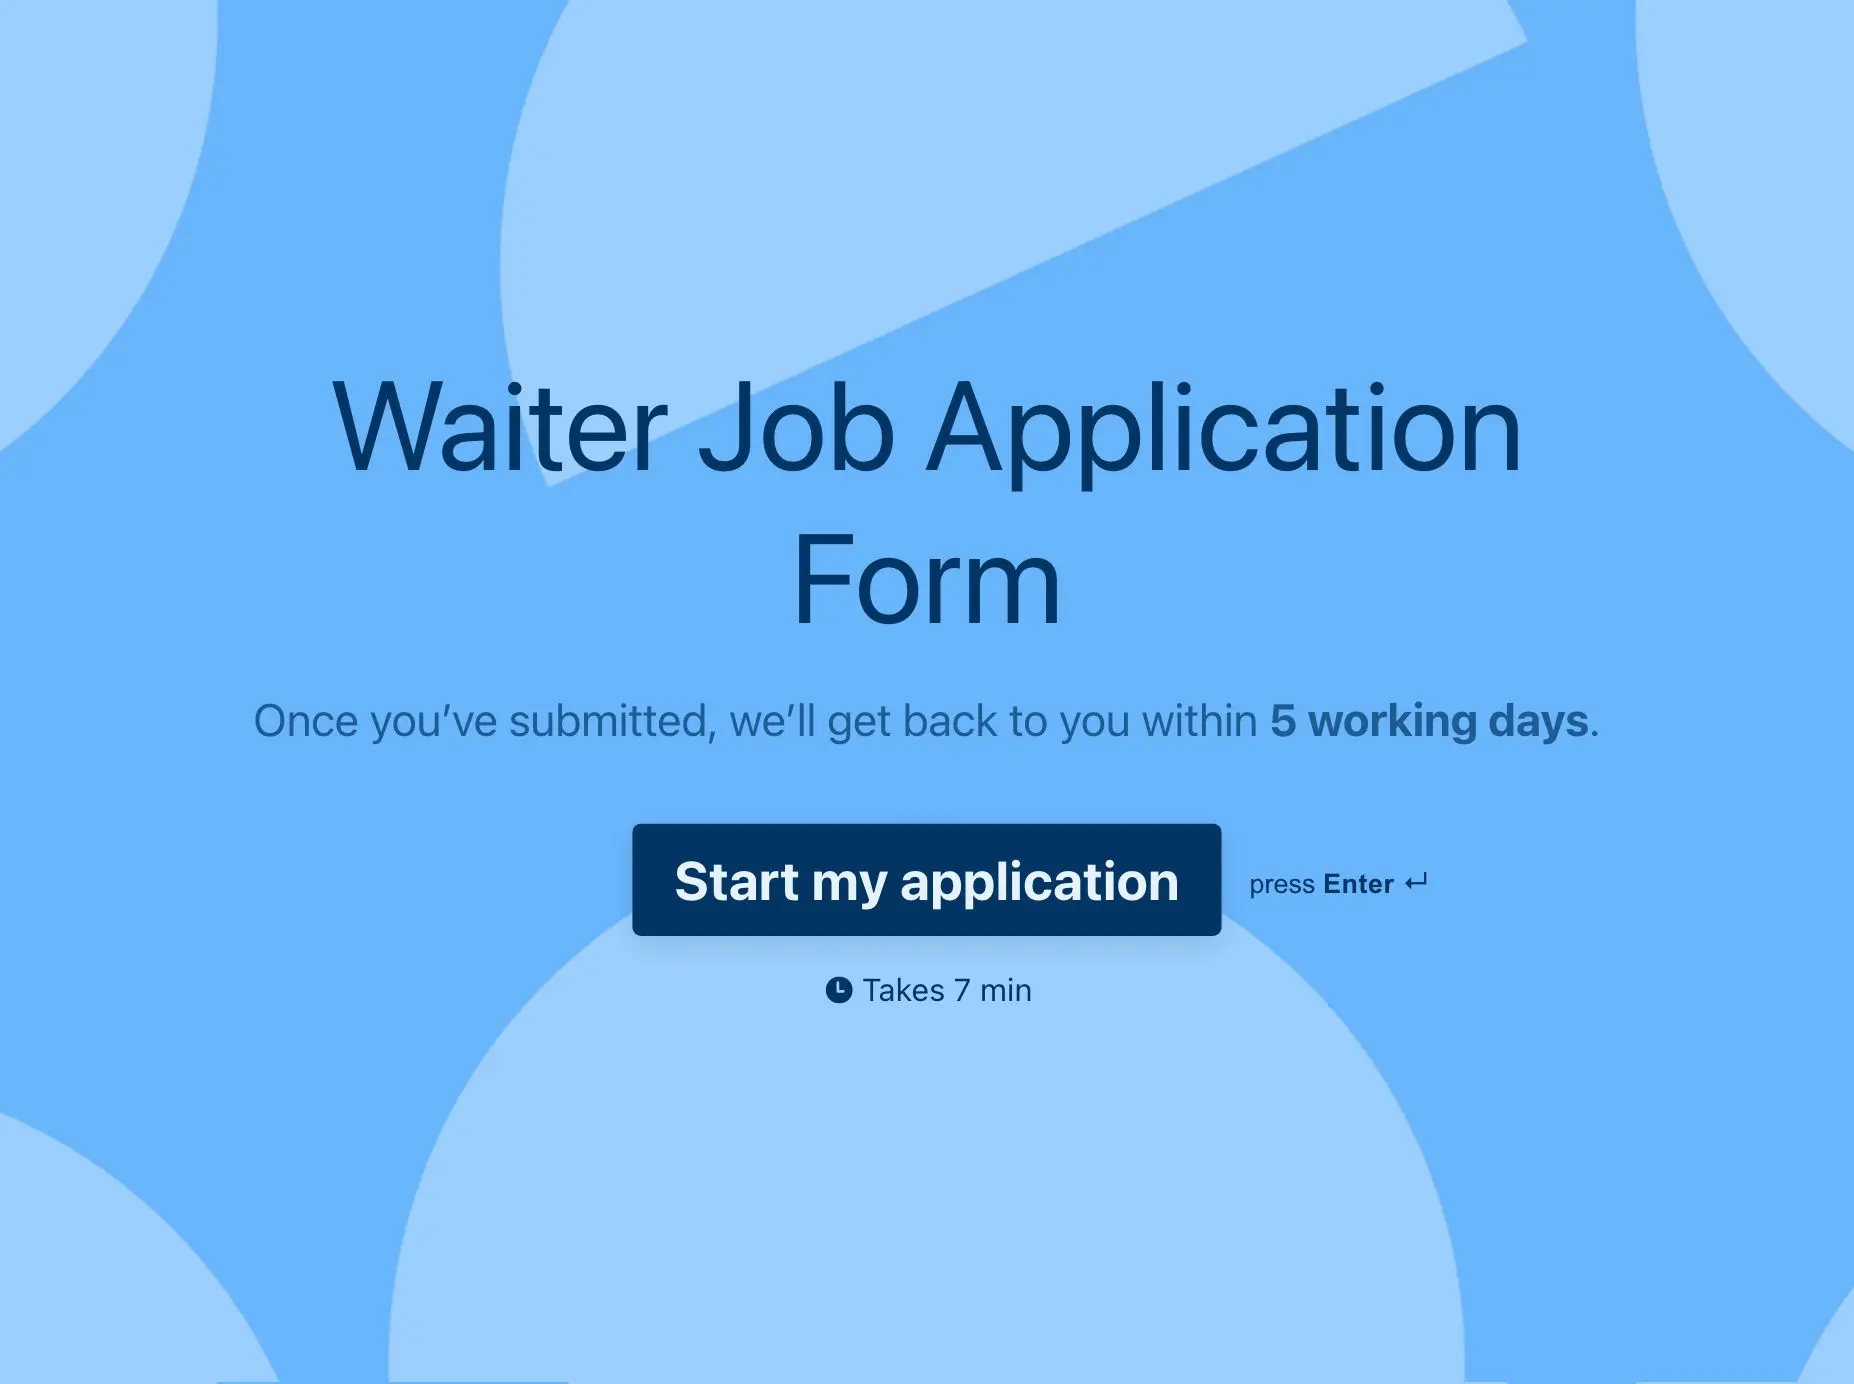 Waiter Job Application Form Template Hero